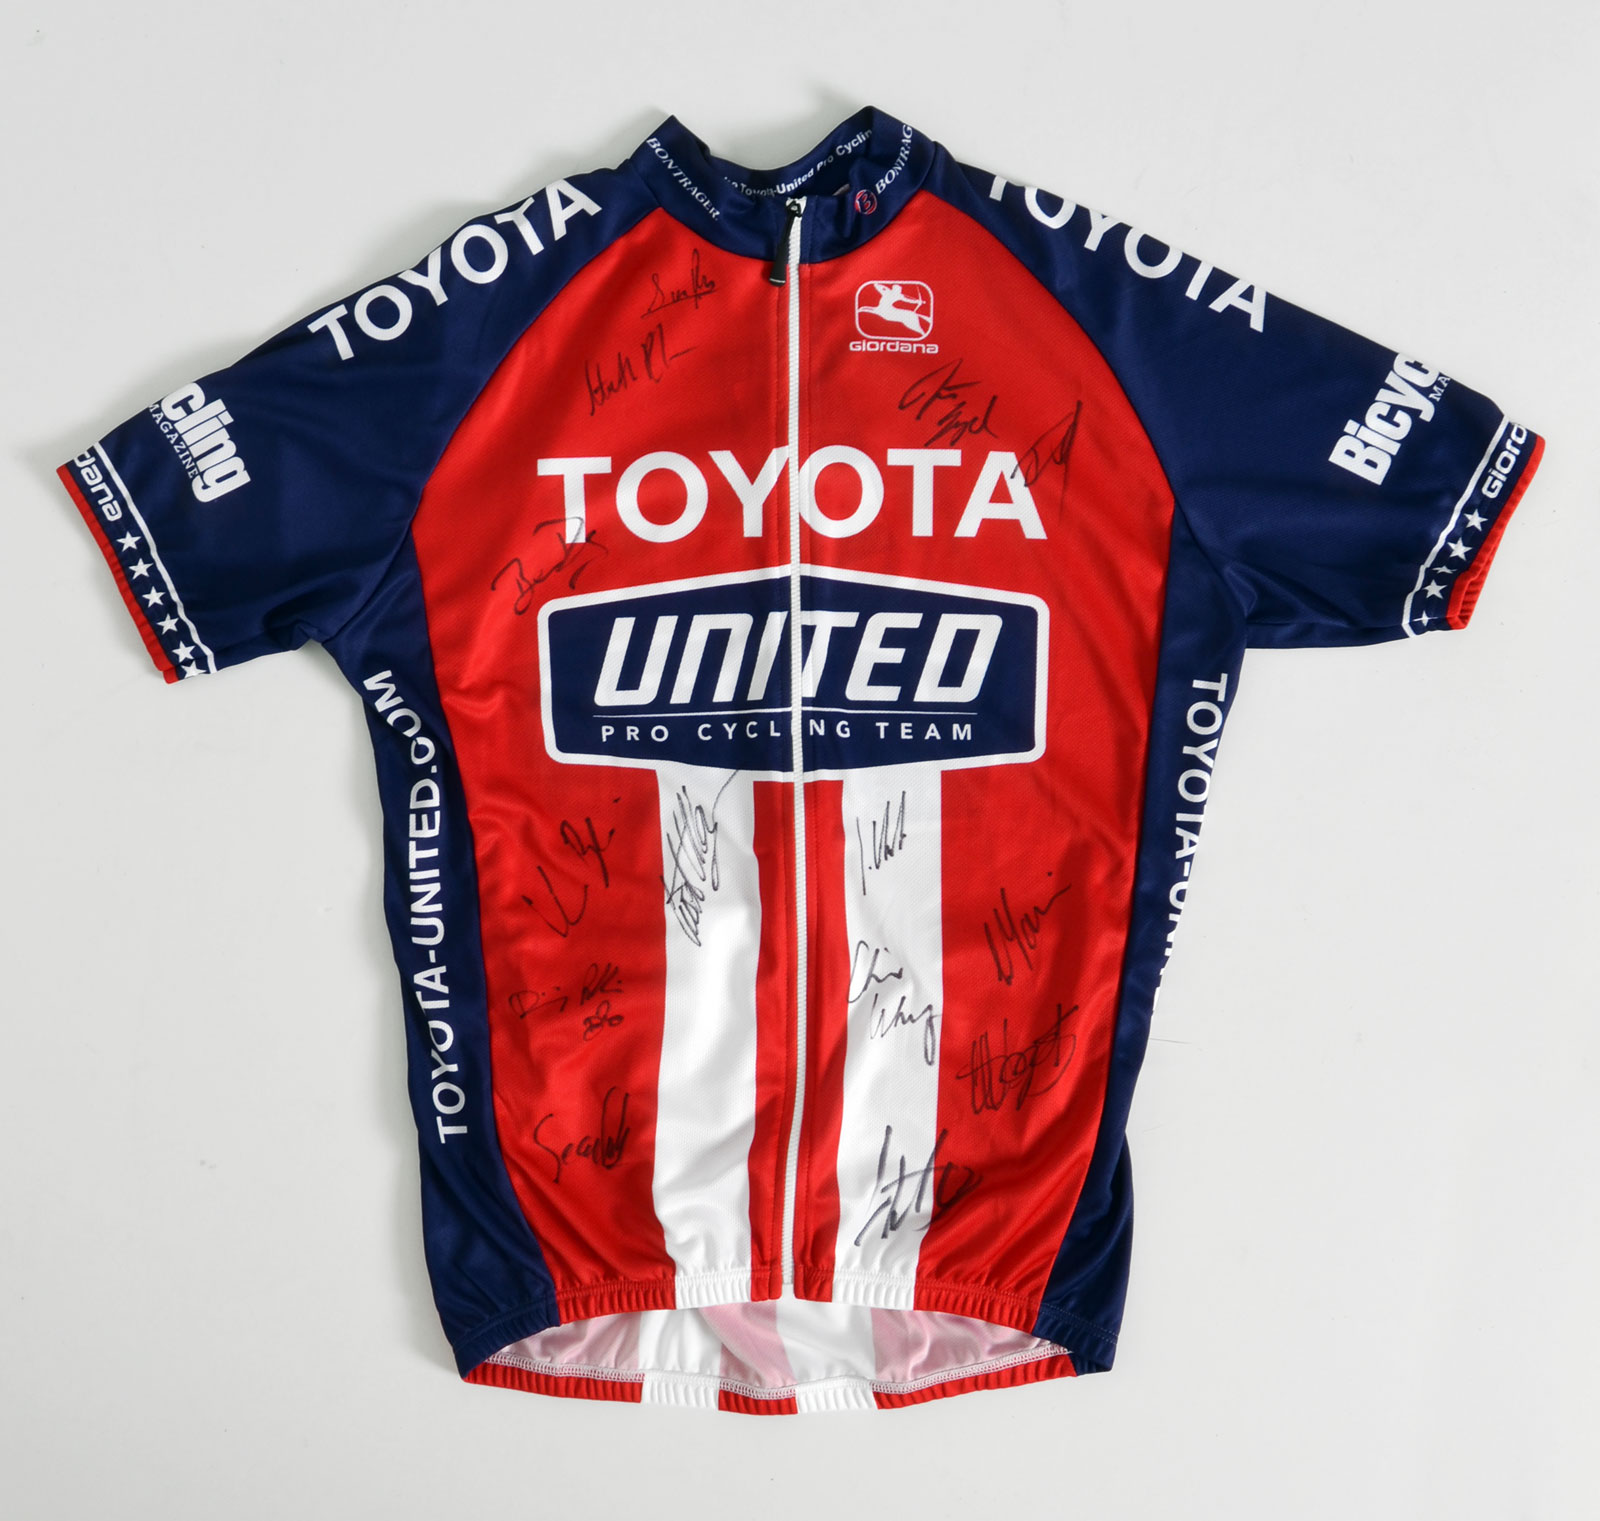 cycling team toyota united #2